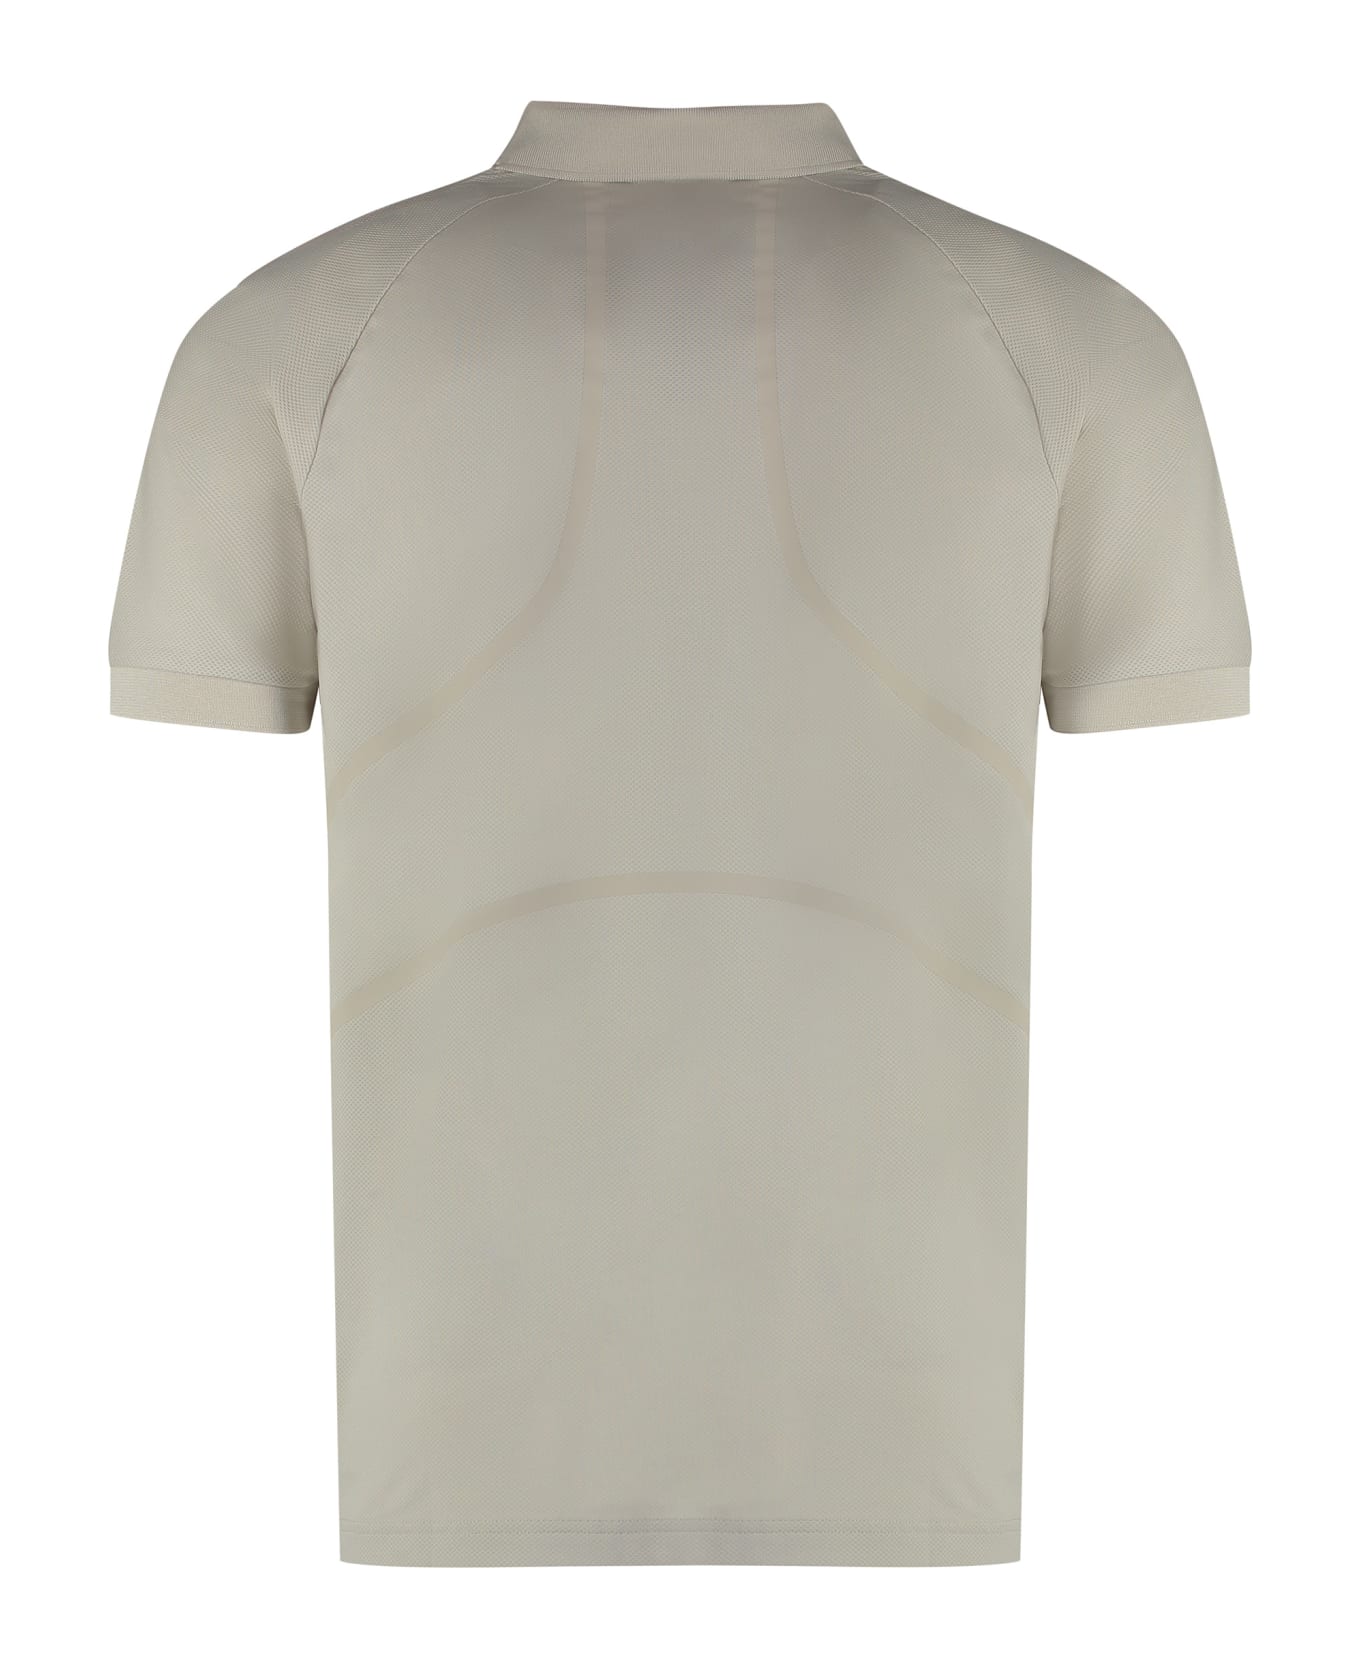 Hugo Boss Technical Fabric Polo Shirt - Beige